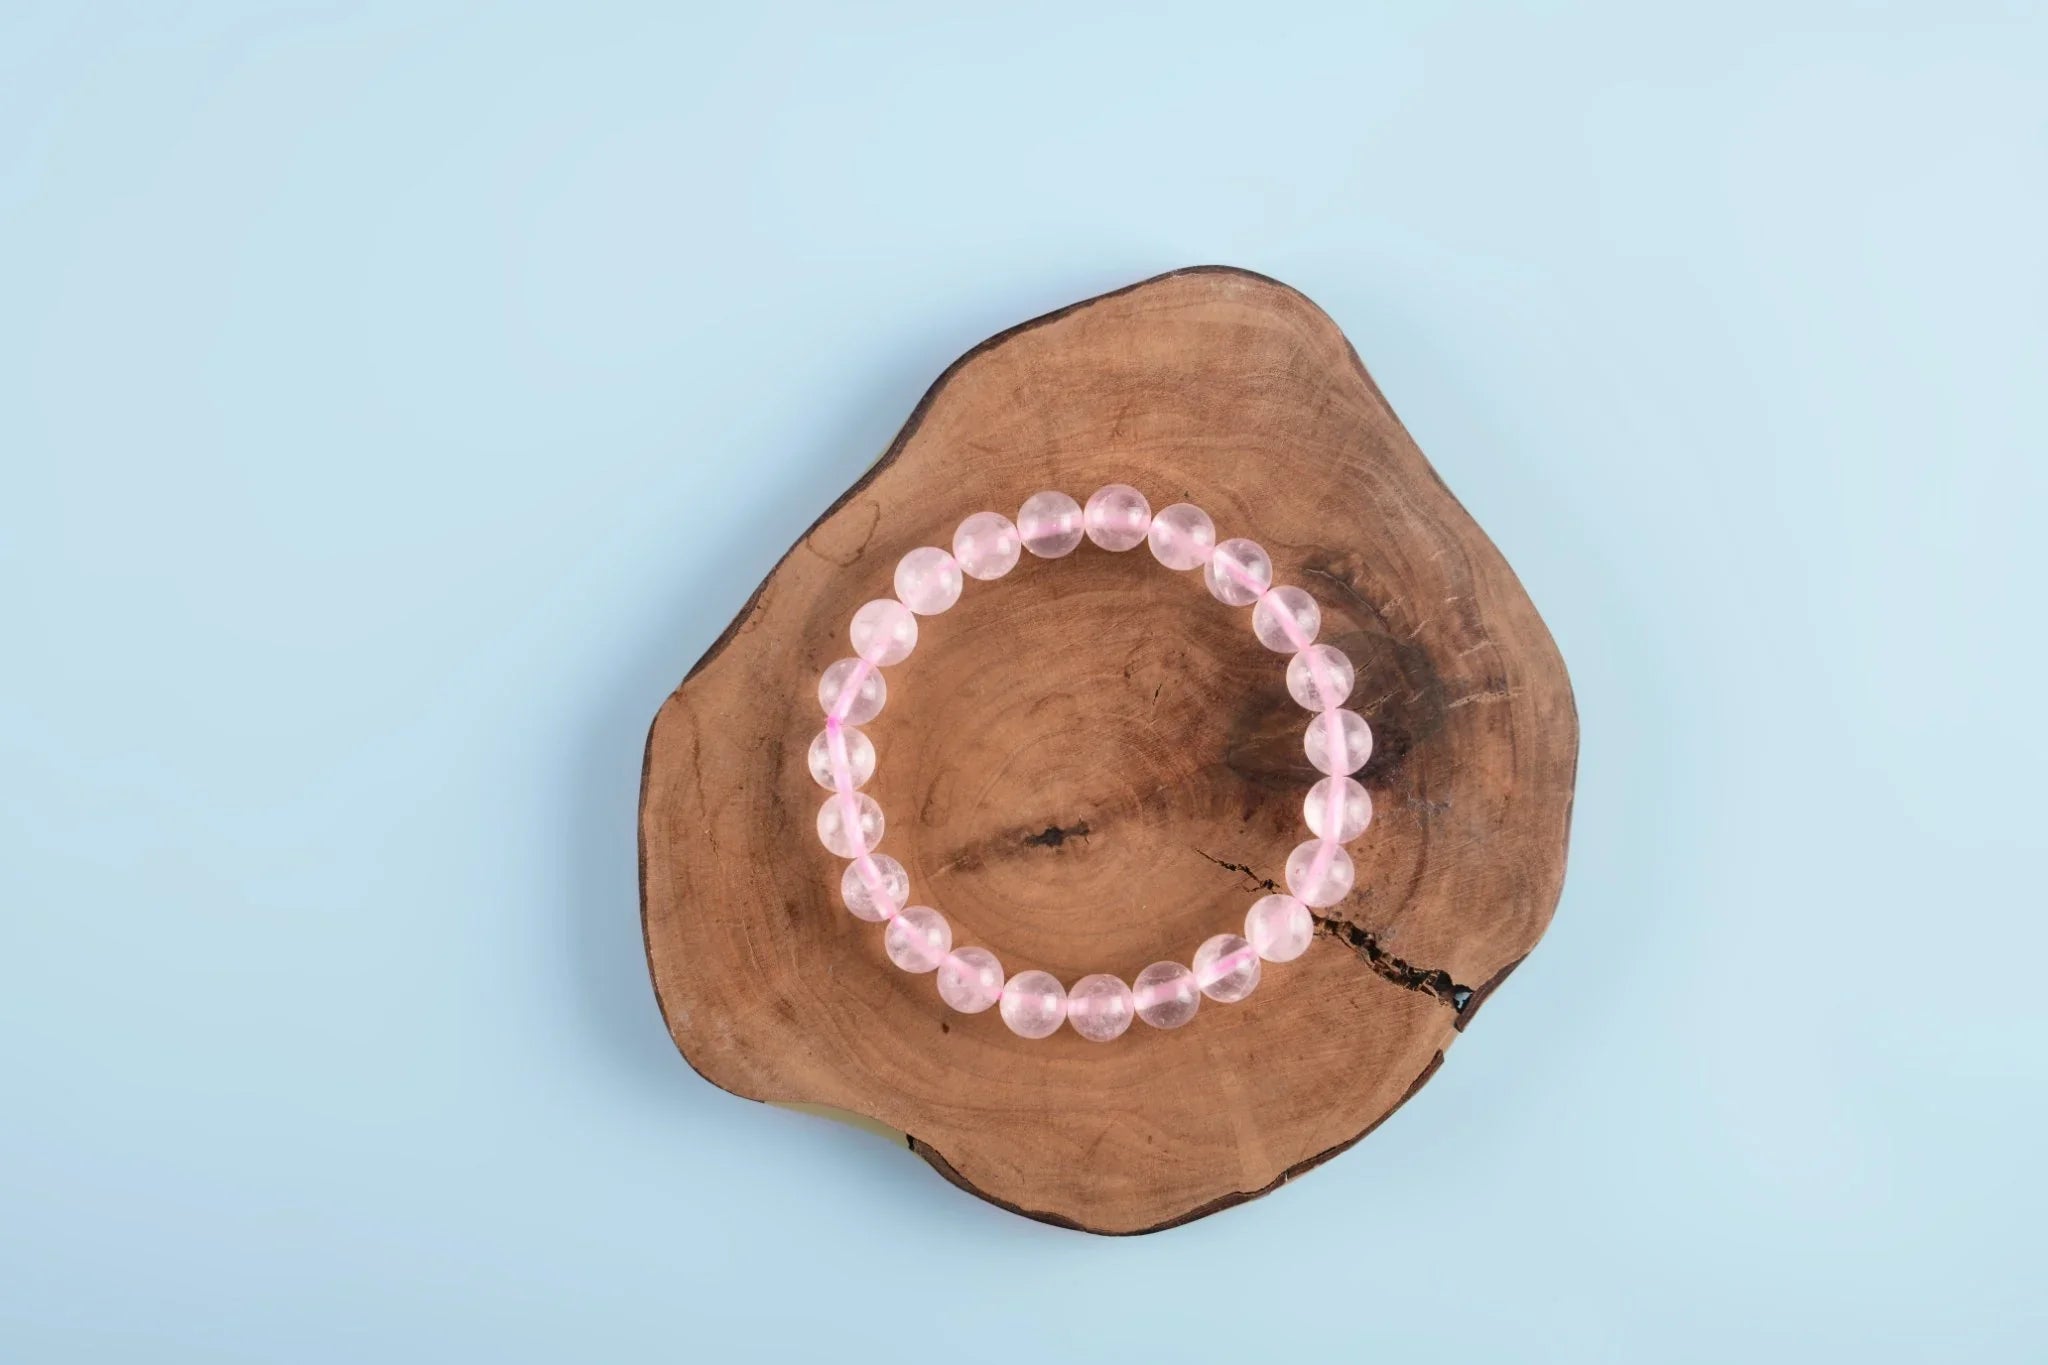 Amazon.com: Rose Quartz & Clear Quartz Crystal Bracelet. Handmade Beaded  Bracelet with Natural Healing Crystals. Love, Self-Love, & Self-Care. Helps  Balance Heart Chakra. 3rd Eye Crystals. : Handmade Products